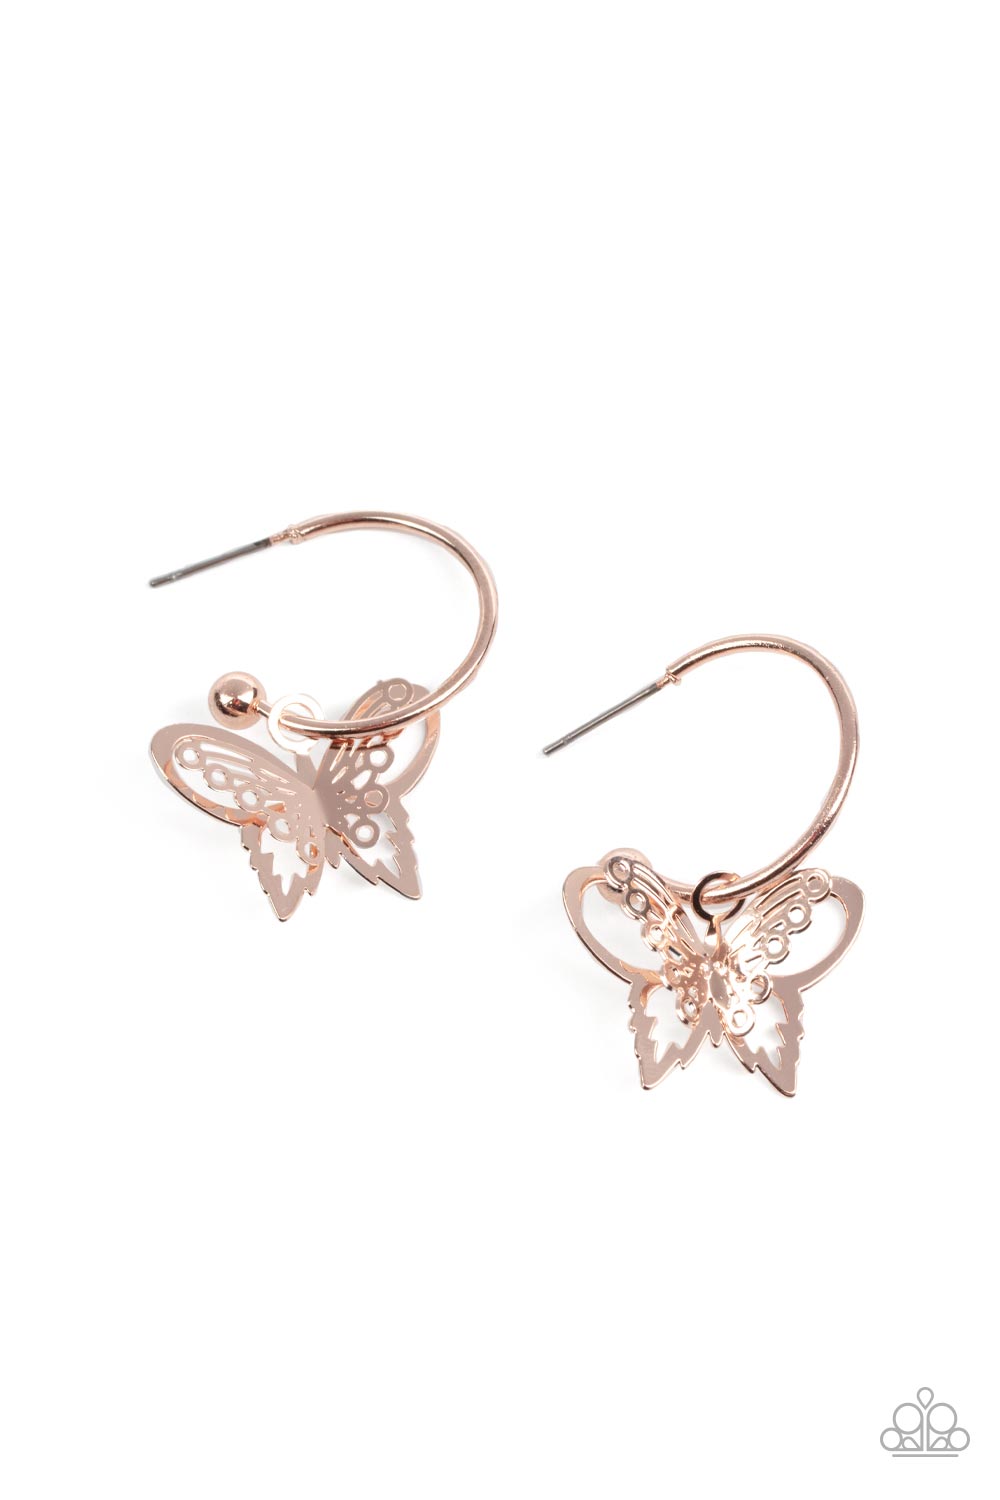 Paparazzi Accessories - Butterfly Freestyle #E605 Bin - Rose Gold Earrings